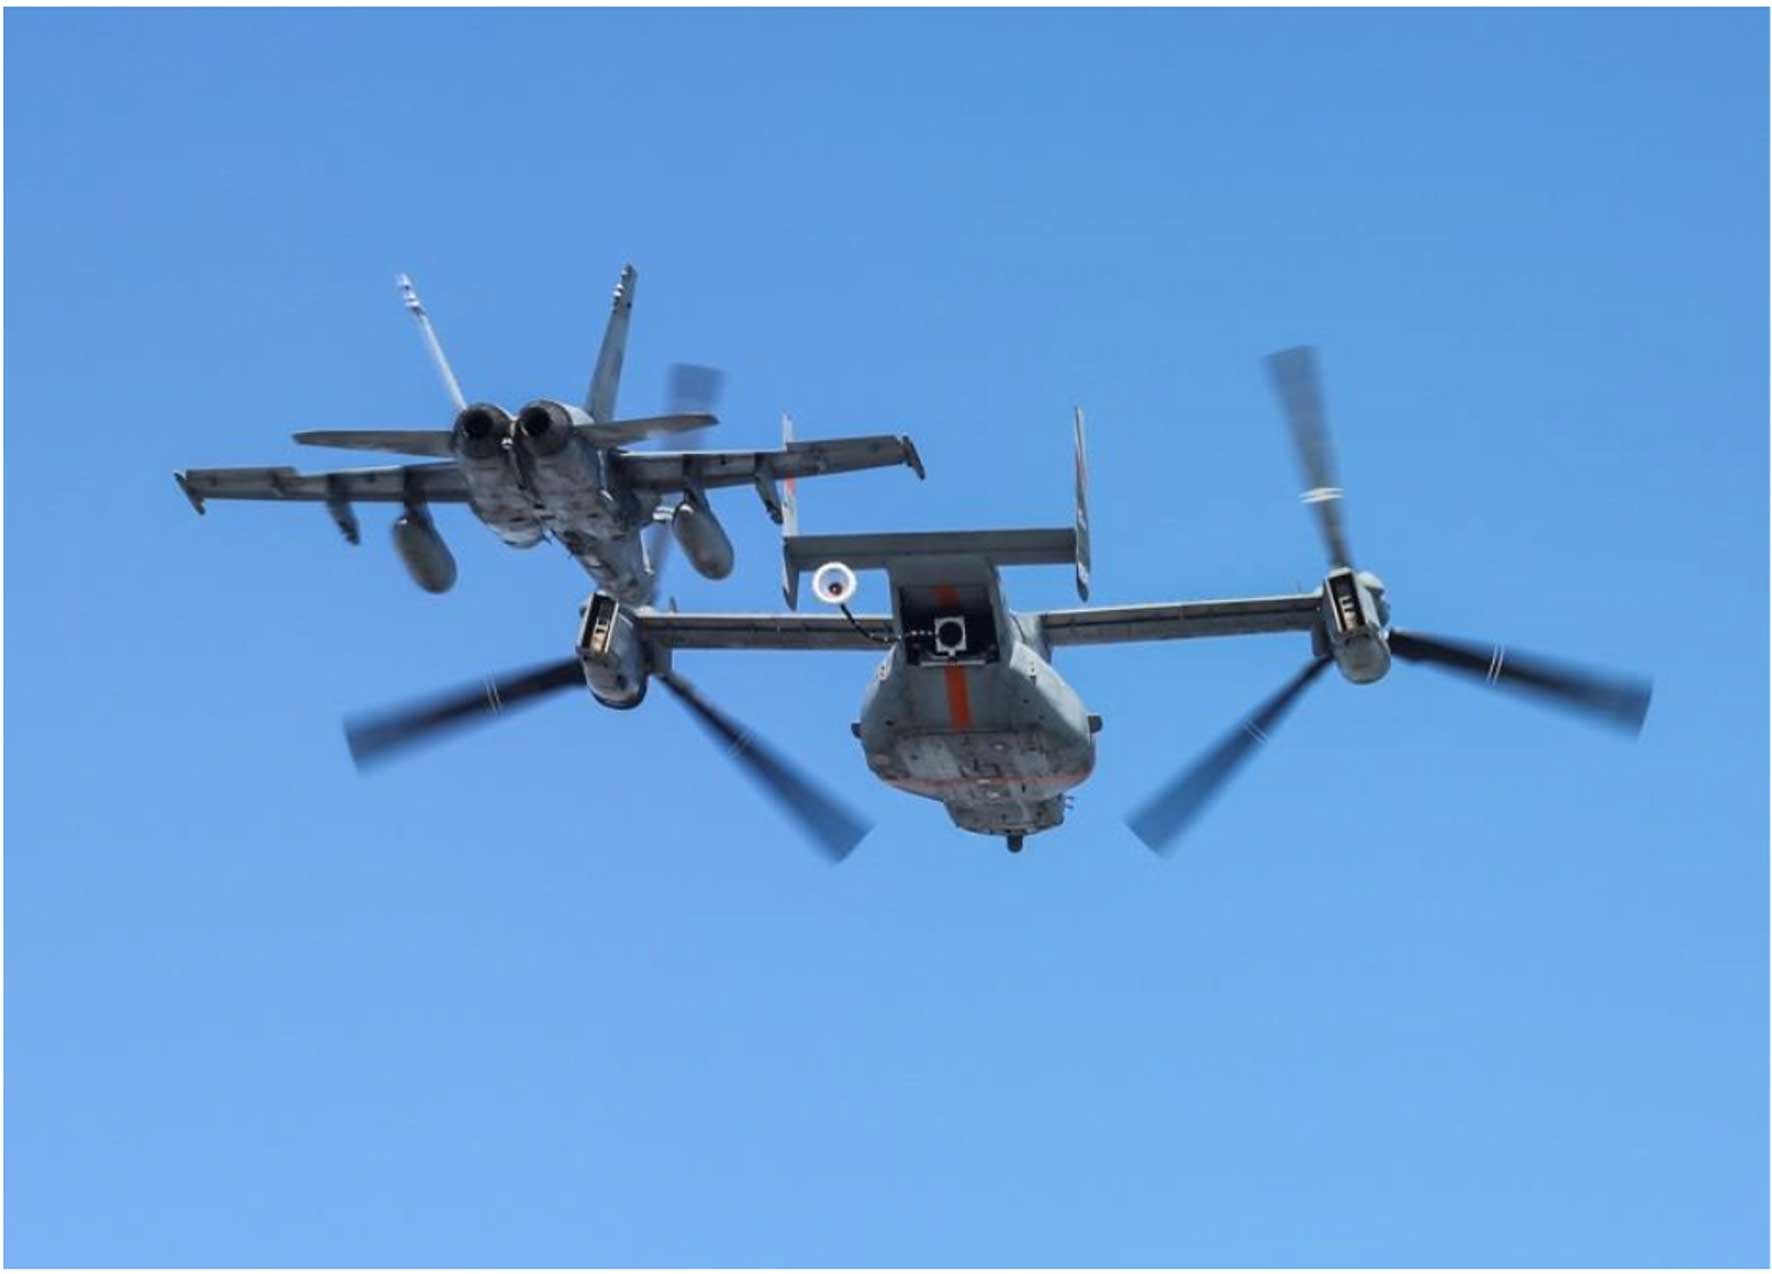 Osprey to Begin Refueling Tests Next Year | Aviation International News